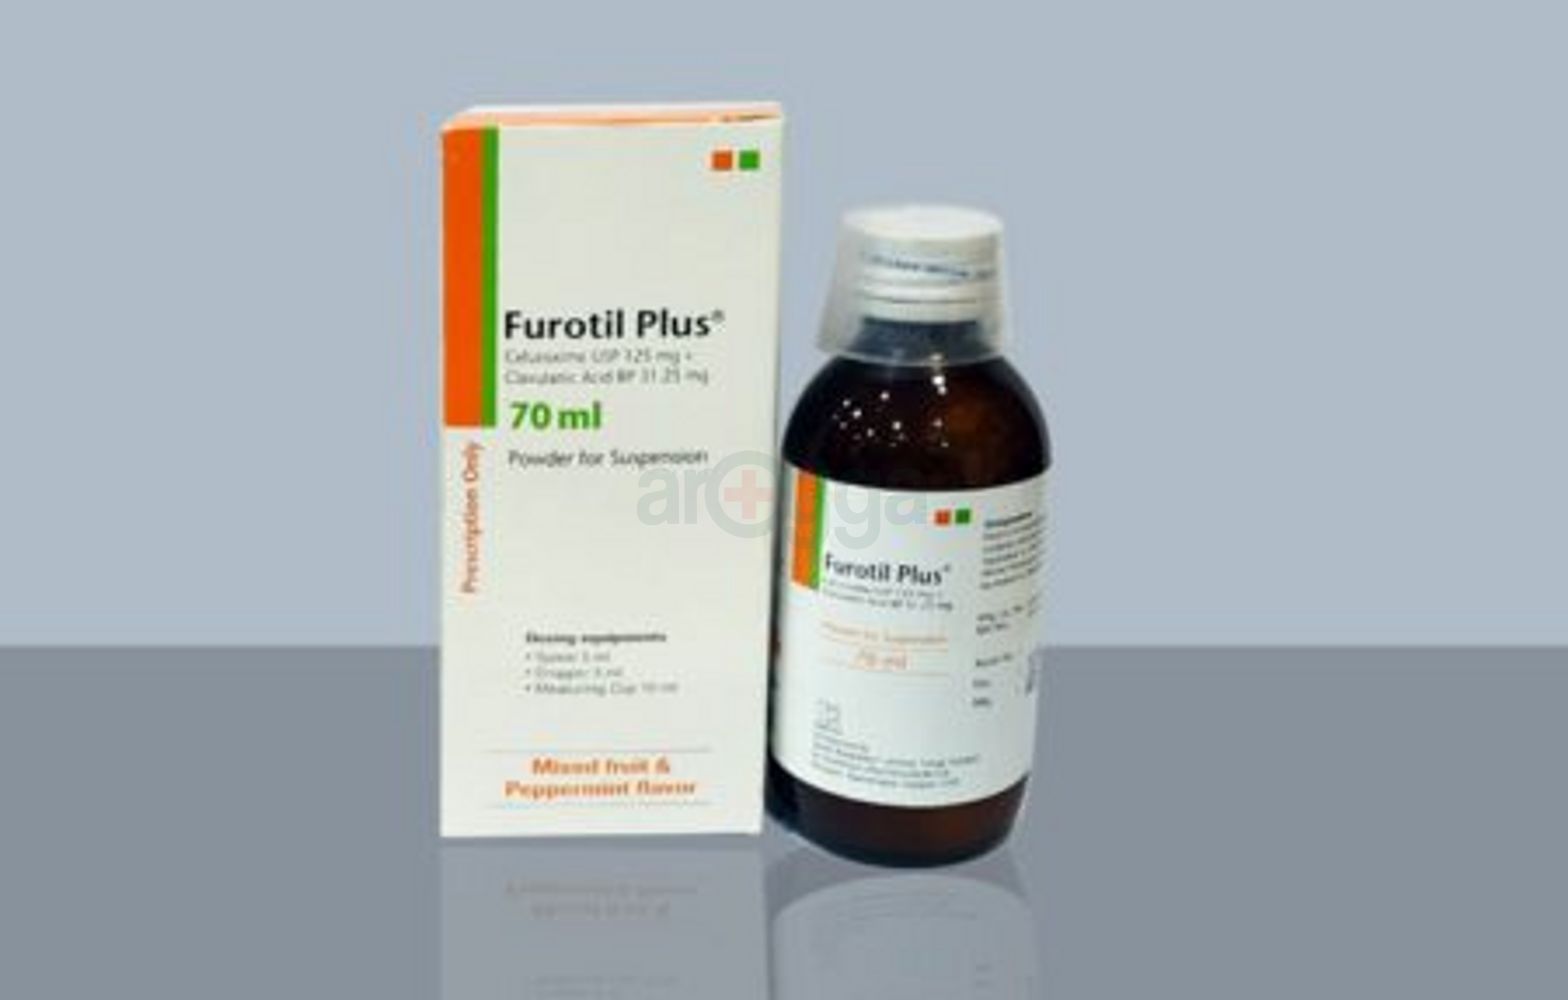 Furotil Plus